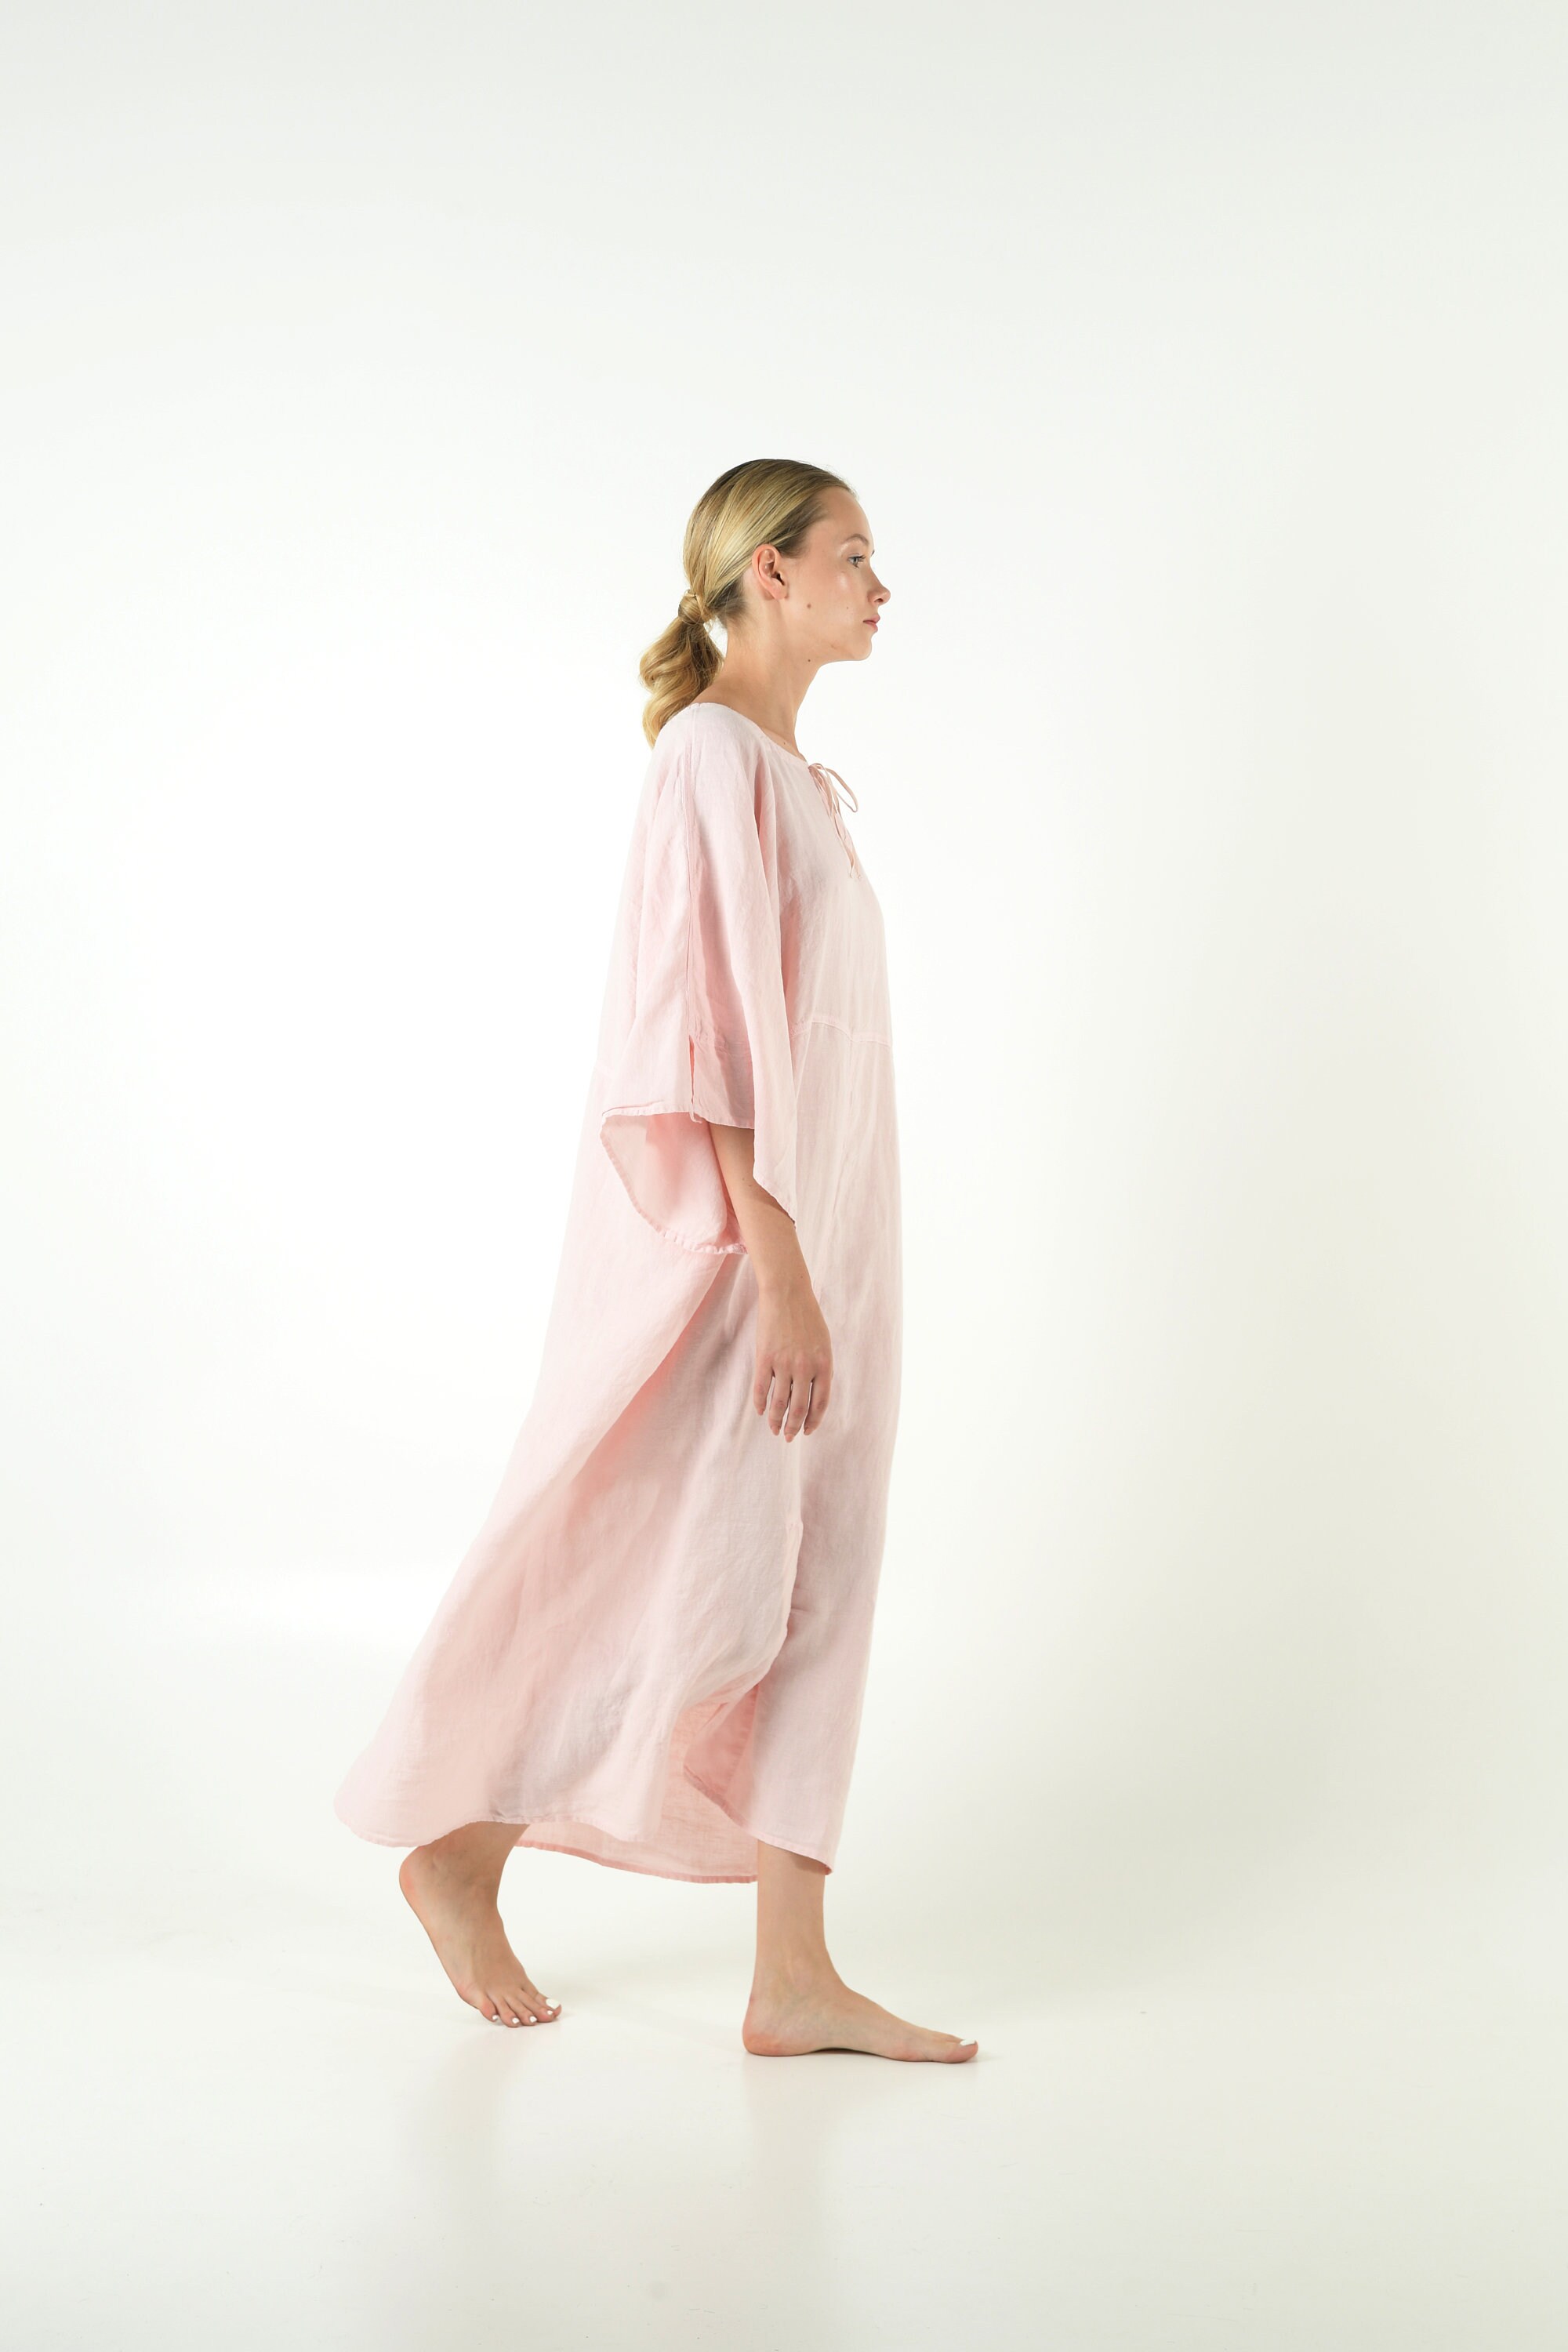 Soft Linen Dress/caftan MYSTIQUE Rose PINK pure linen caftan. Oversized  loose fit. ONESIZE. Simple, contemporary, comfortable.